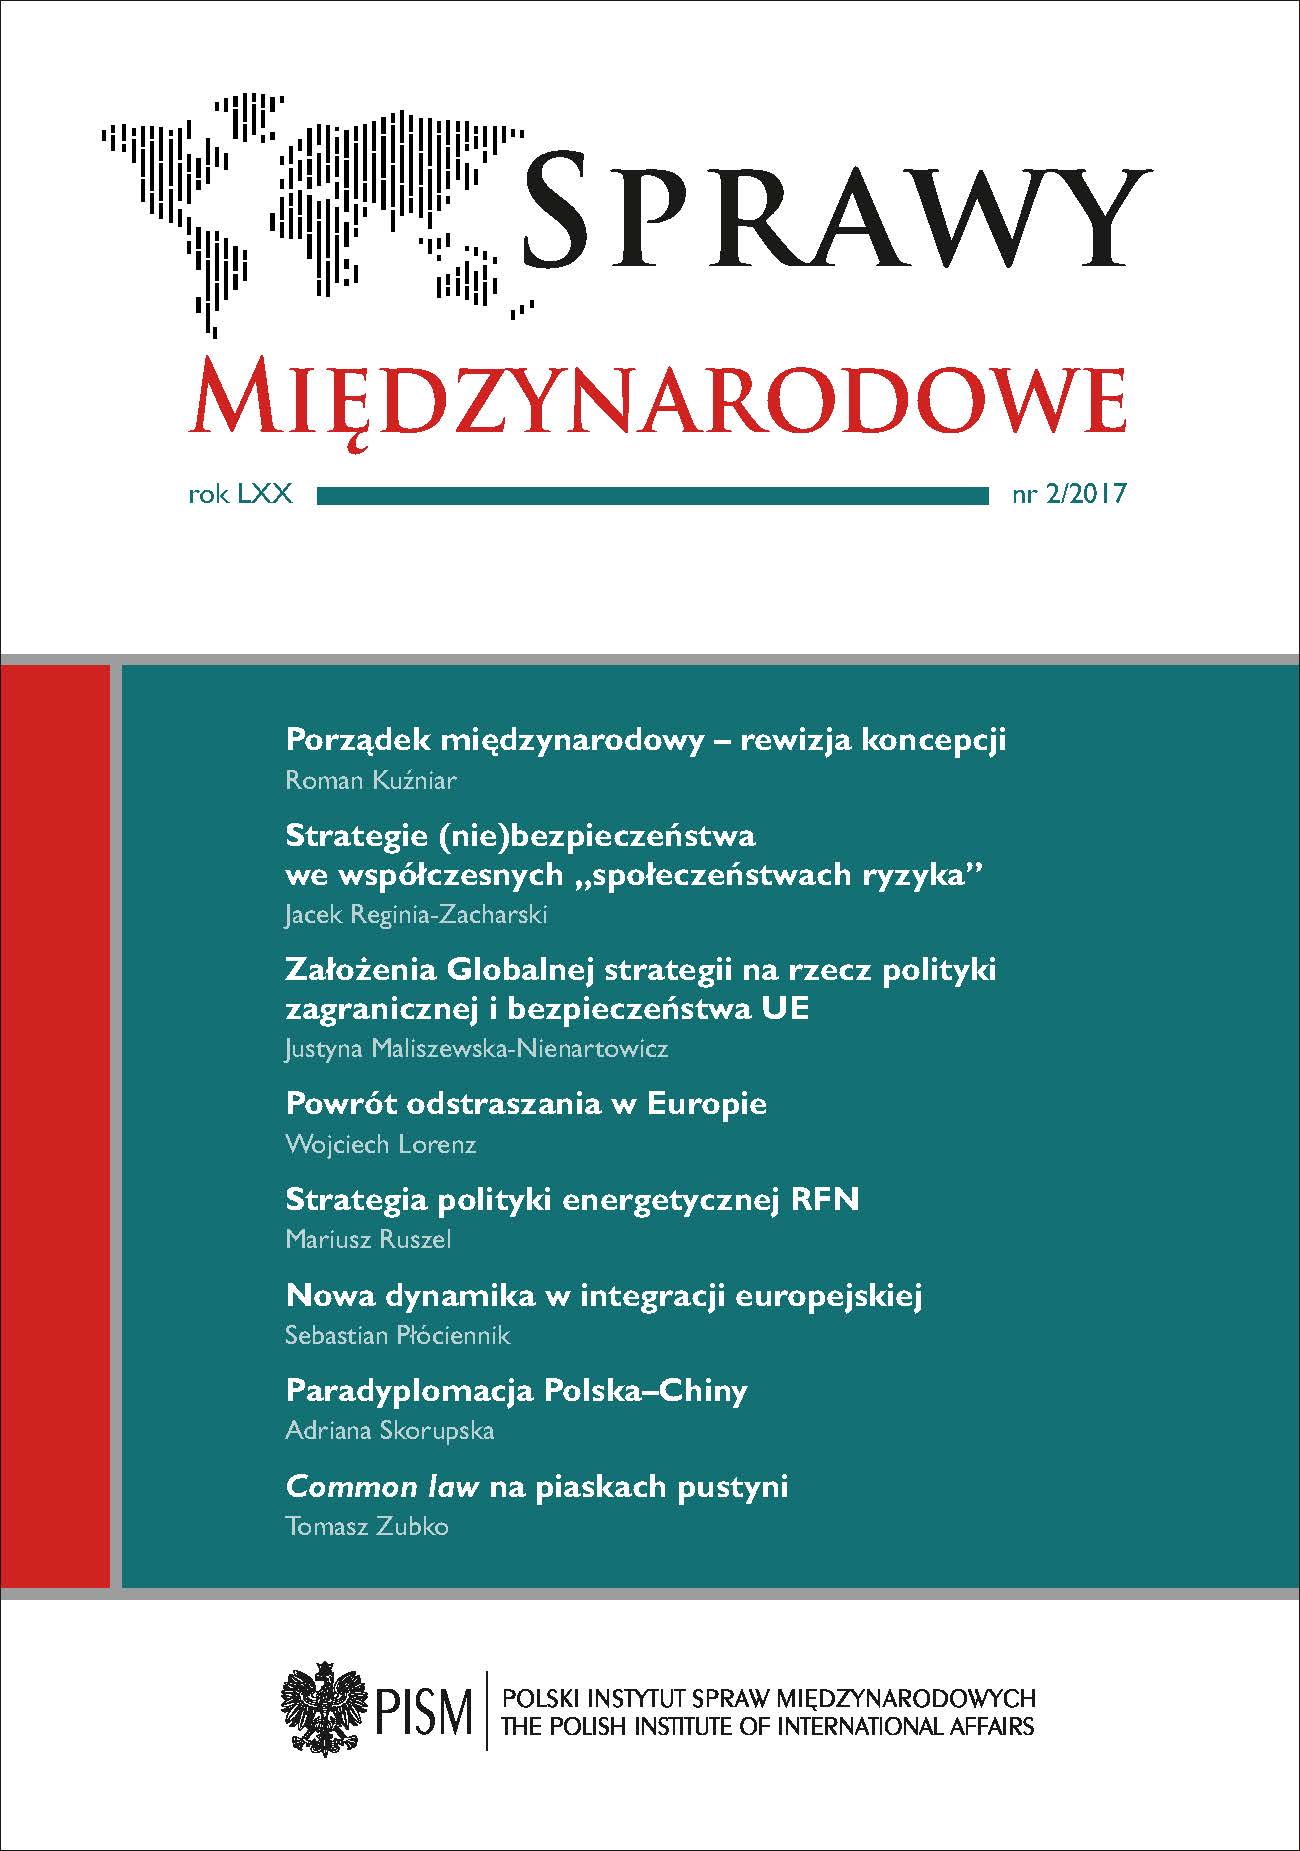 Poland-China Paradiplomacy Cover Image